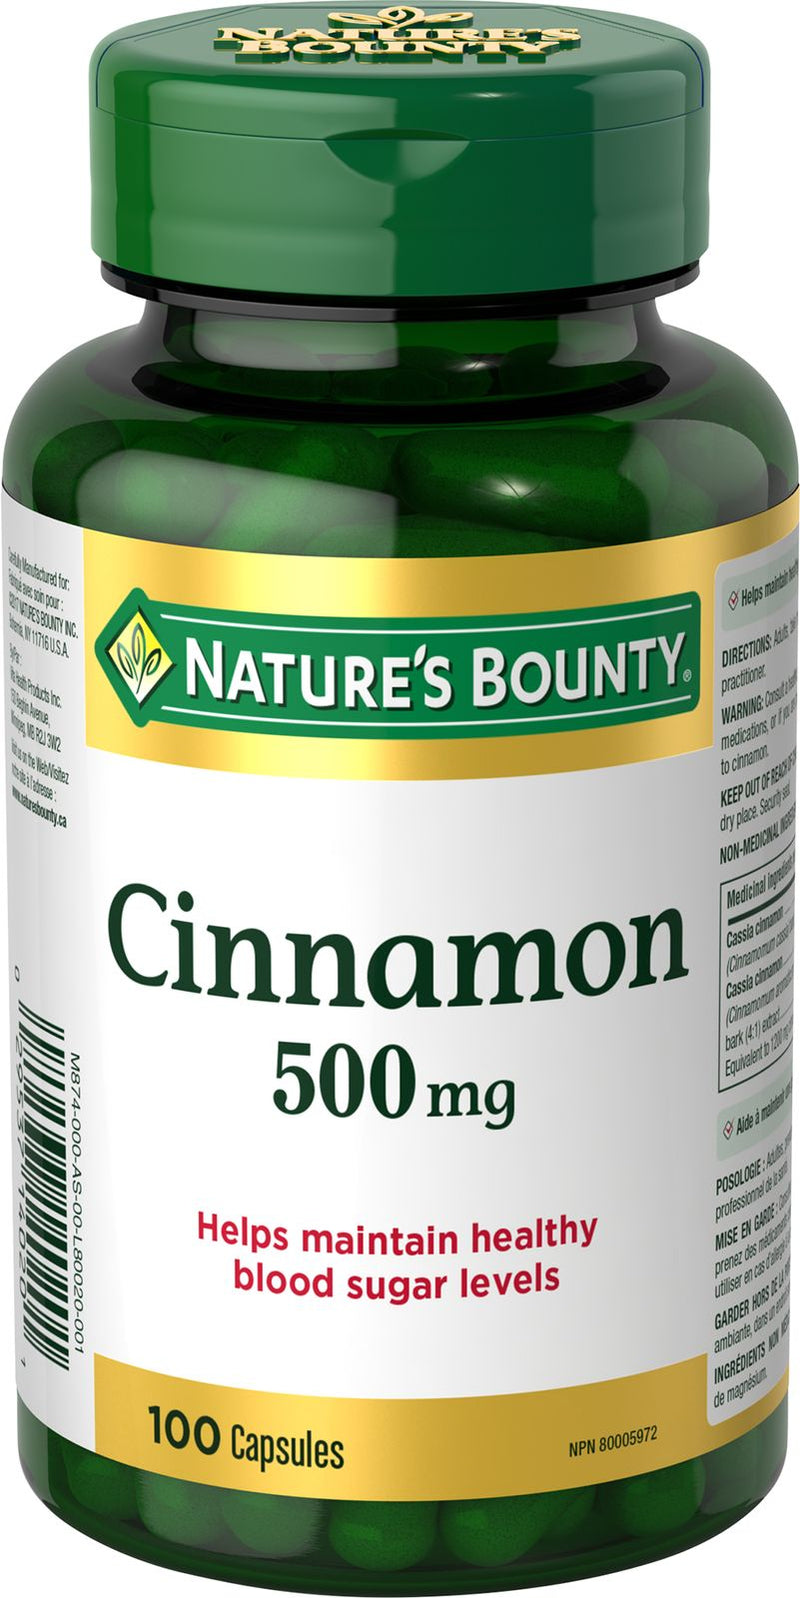 Nature's Bounty Cinnamon Capsules